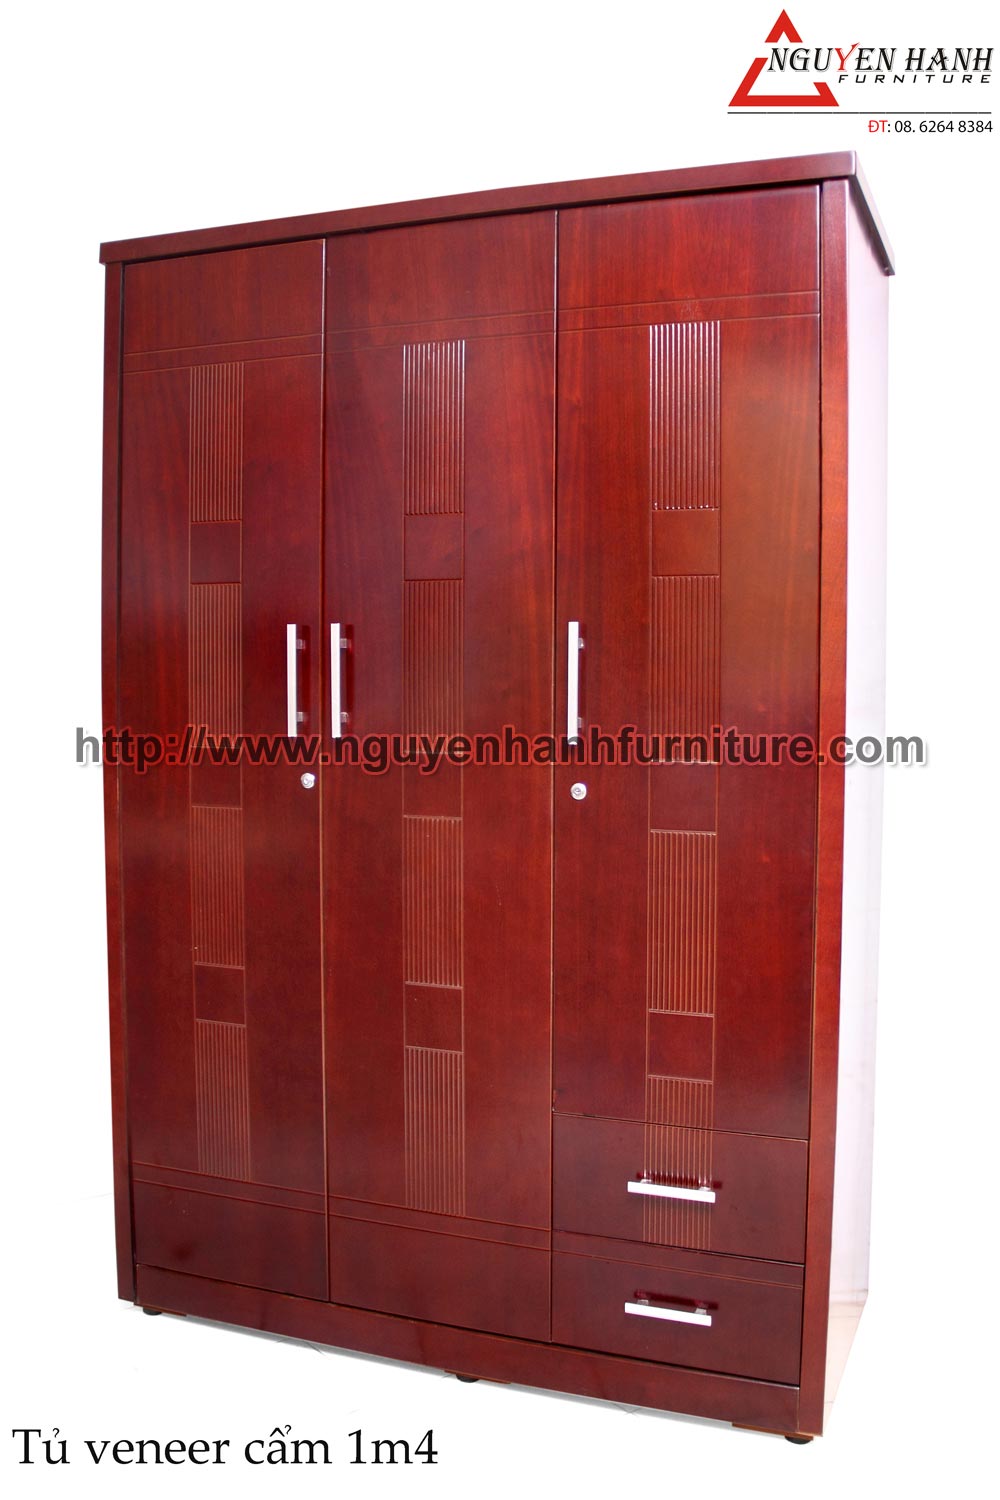 Name product: 1m4 Wardrobe of veneer Rosewood - Dimensions: 58 x 140 x 210cm - Description: Veneer rosewood